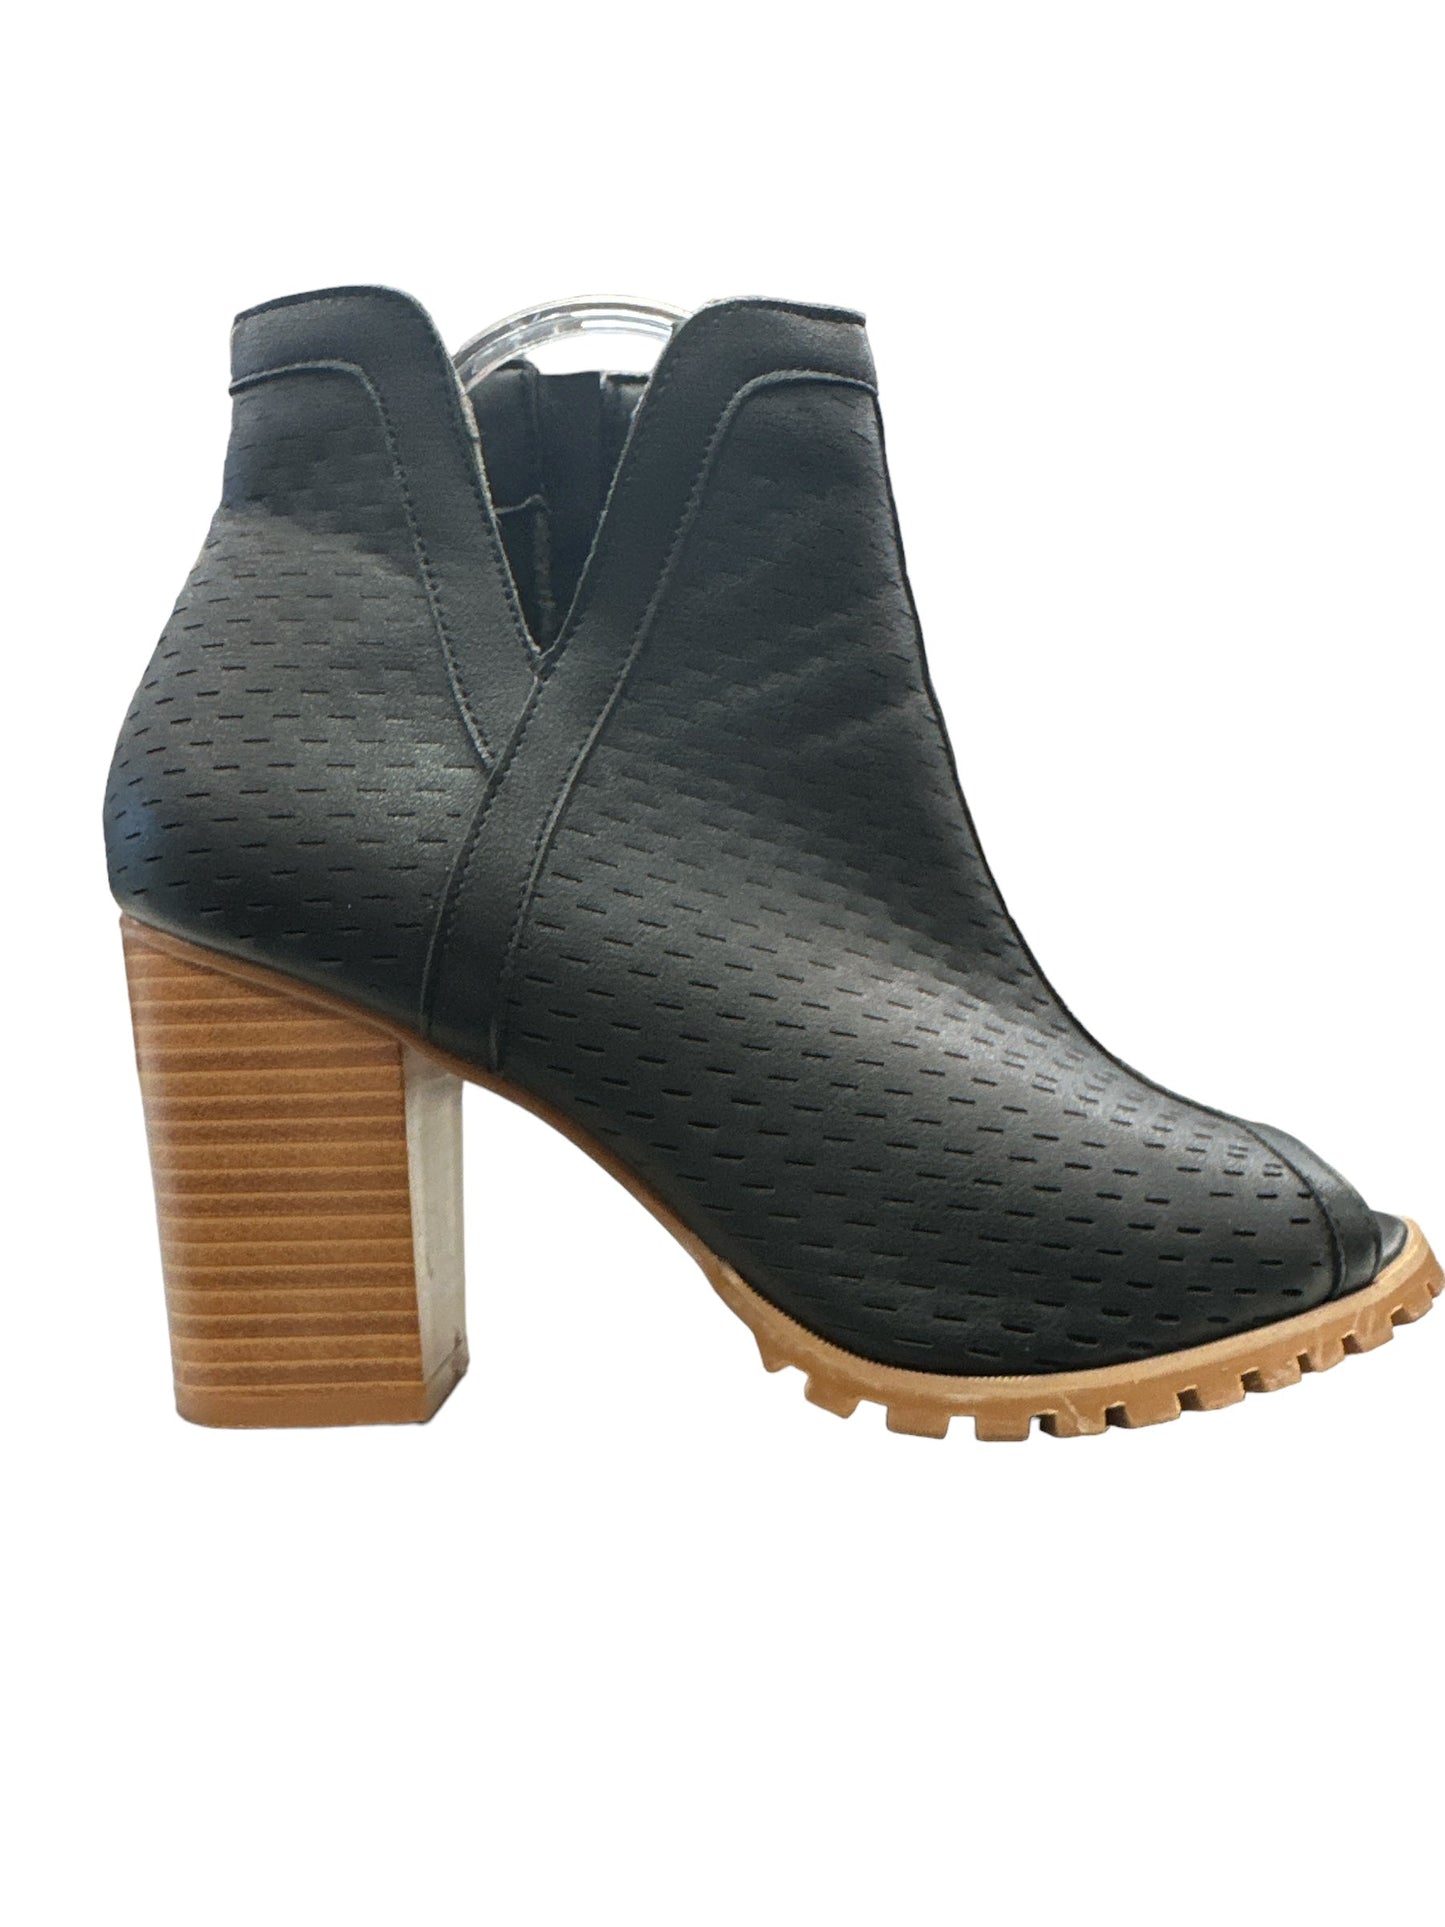 Black Shoes Heels Block Seven 7, Size 10